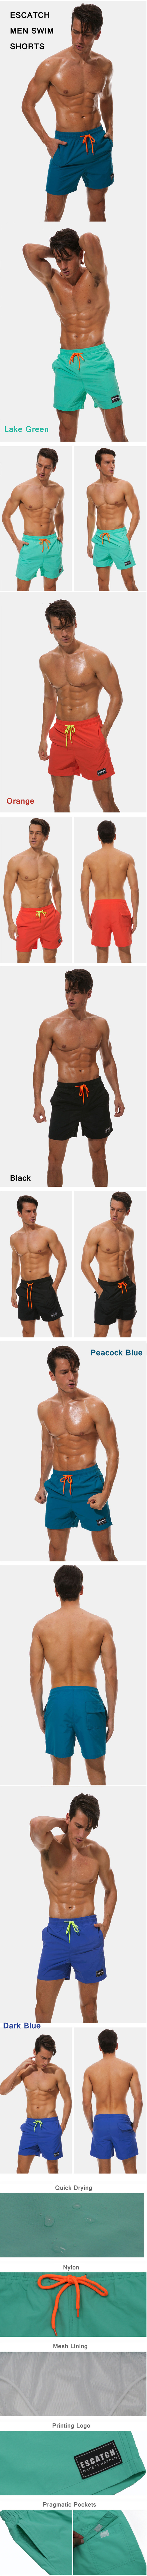 ESCATCH-Men-Summer-Swimming-Trunks-Nylon-Surfing-Waterproof-Quick-Dry-Pockets-Beach-Shorts-1330922